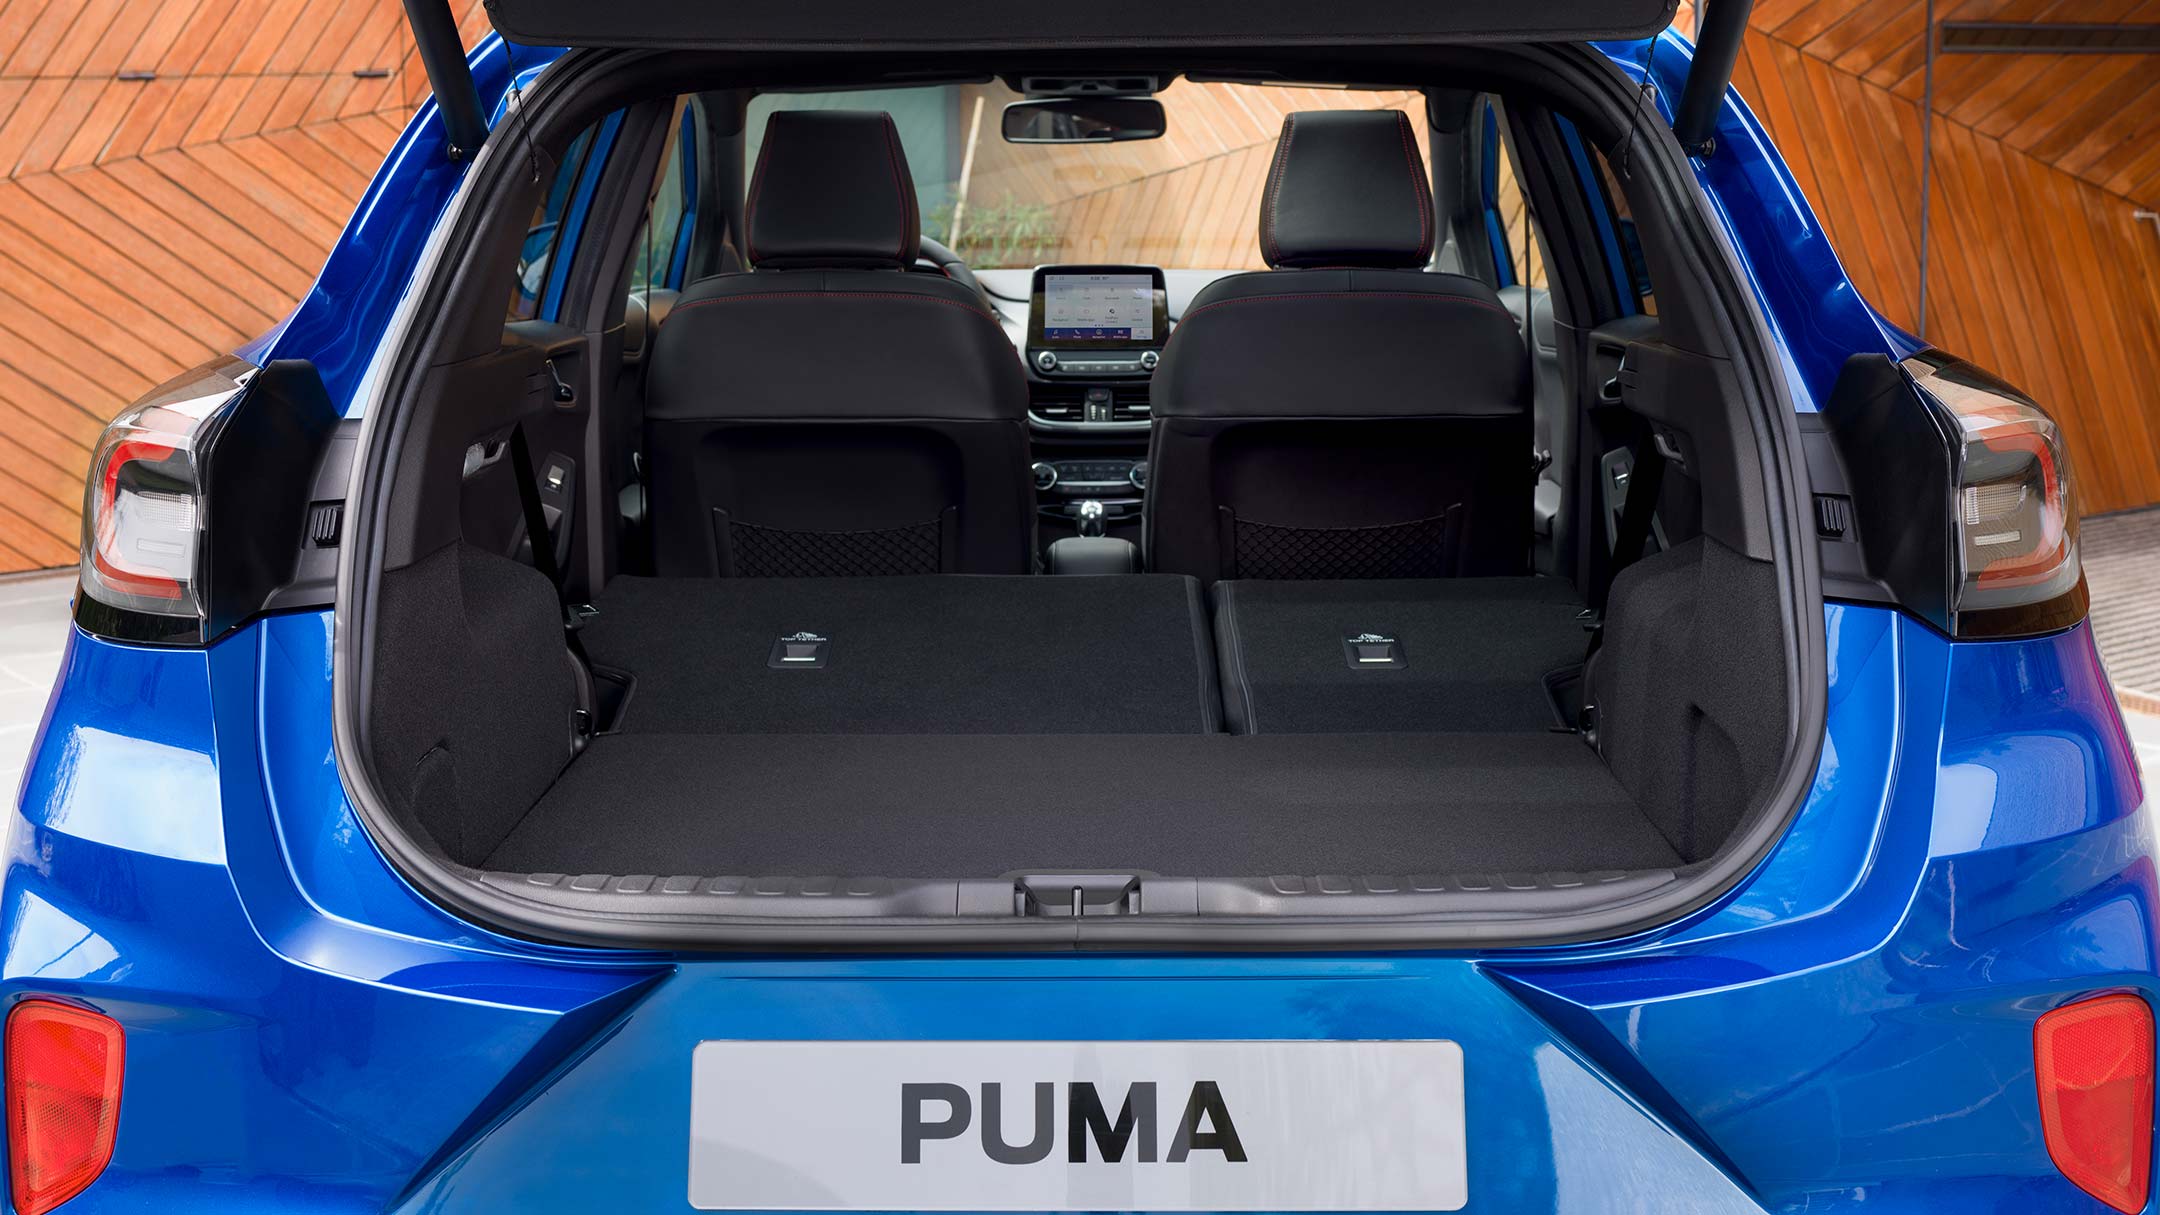 Ford Puma interior showing rear seats